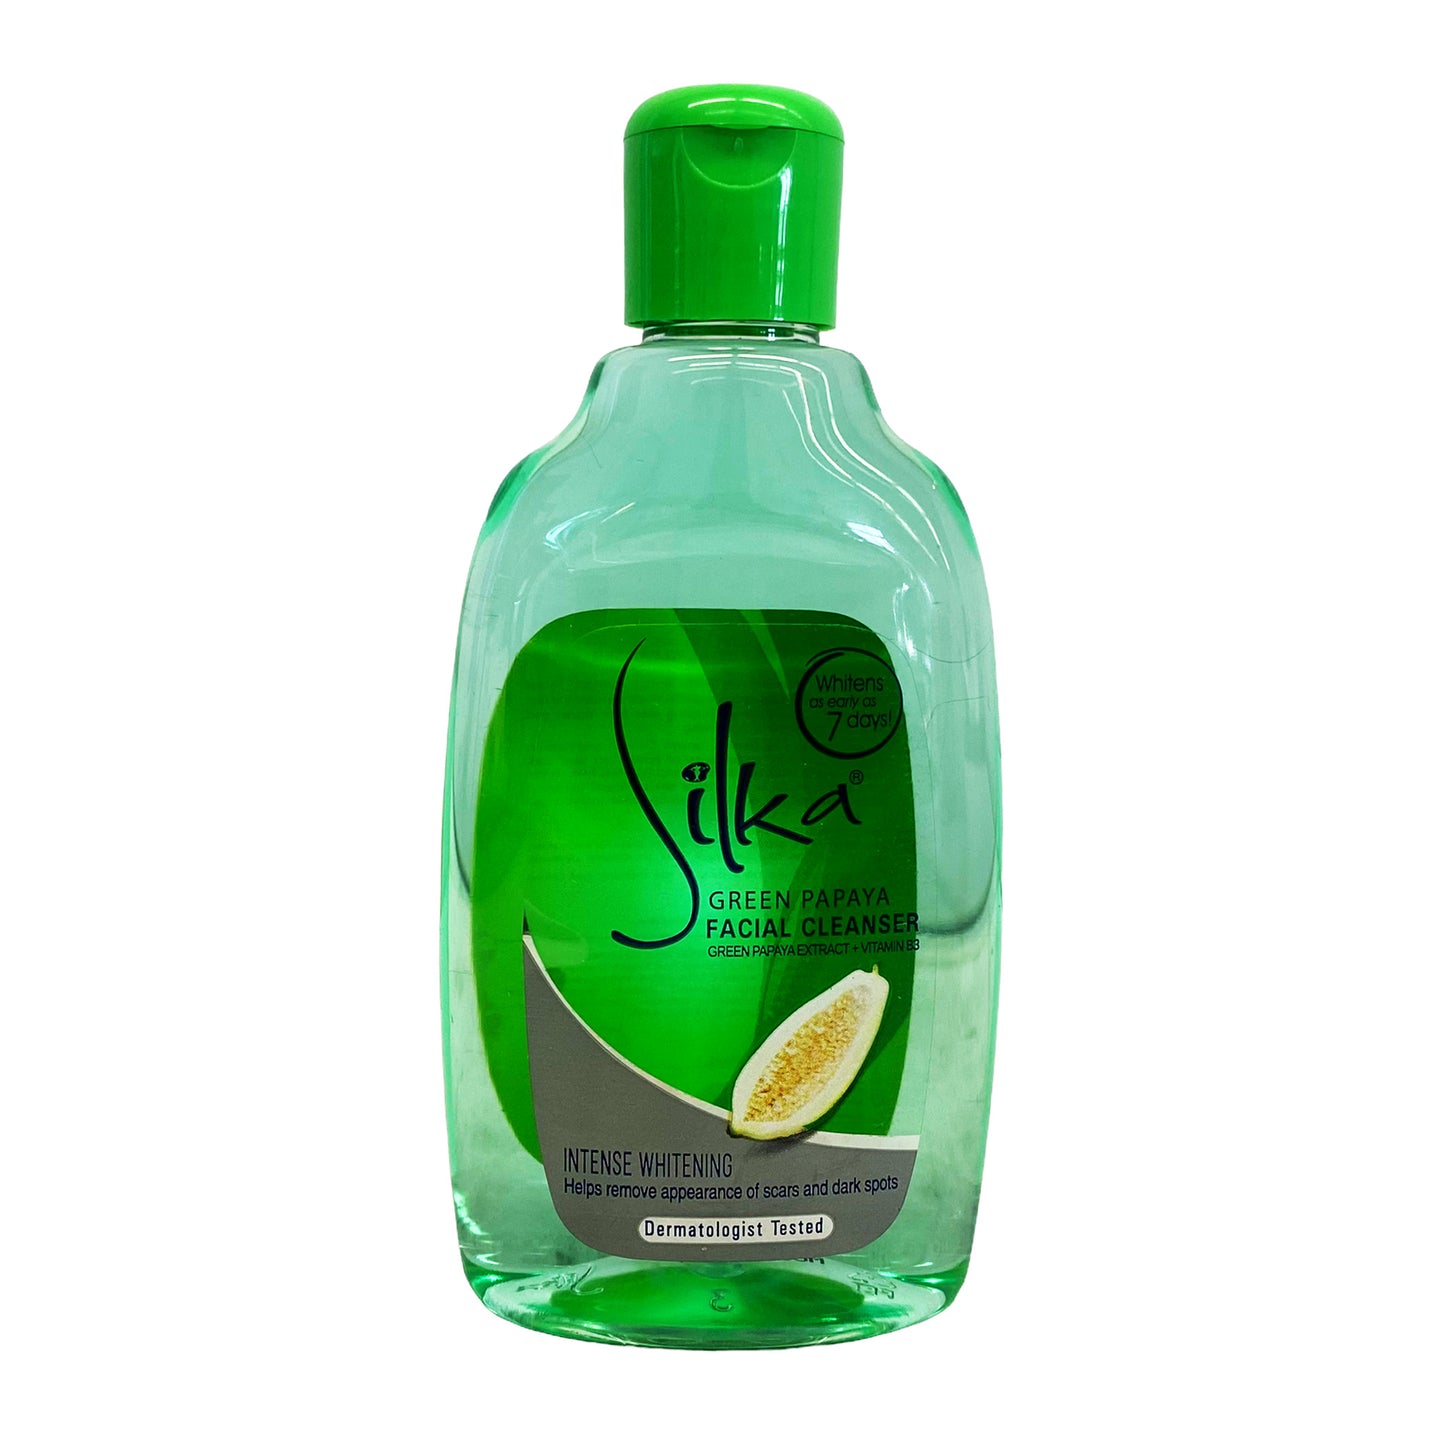 Front graphic image 2 of Silka Facial Cleanser - Green Papaya 5.07oz (150ml)